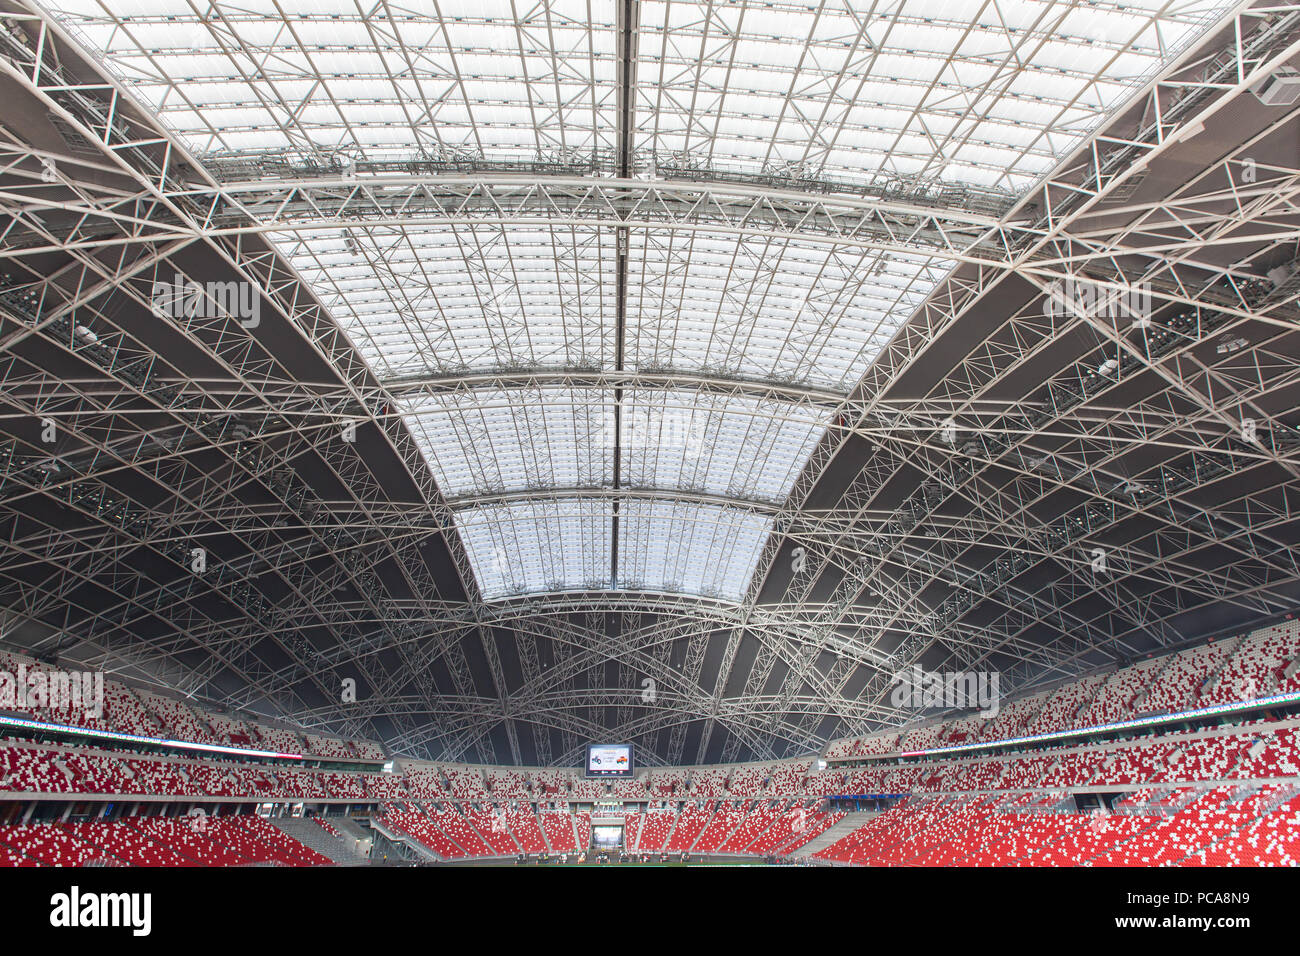 Massives Indoor-Dacharchitektur-Design im Singapore Sports Hub Stadion. Stockfoto